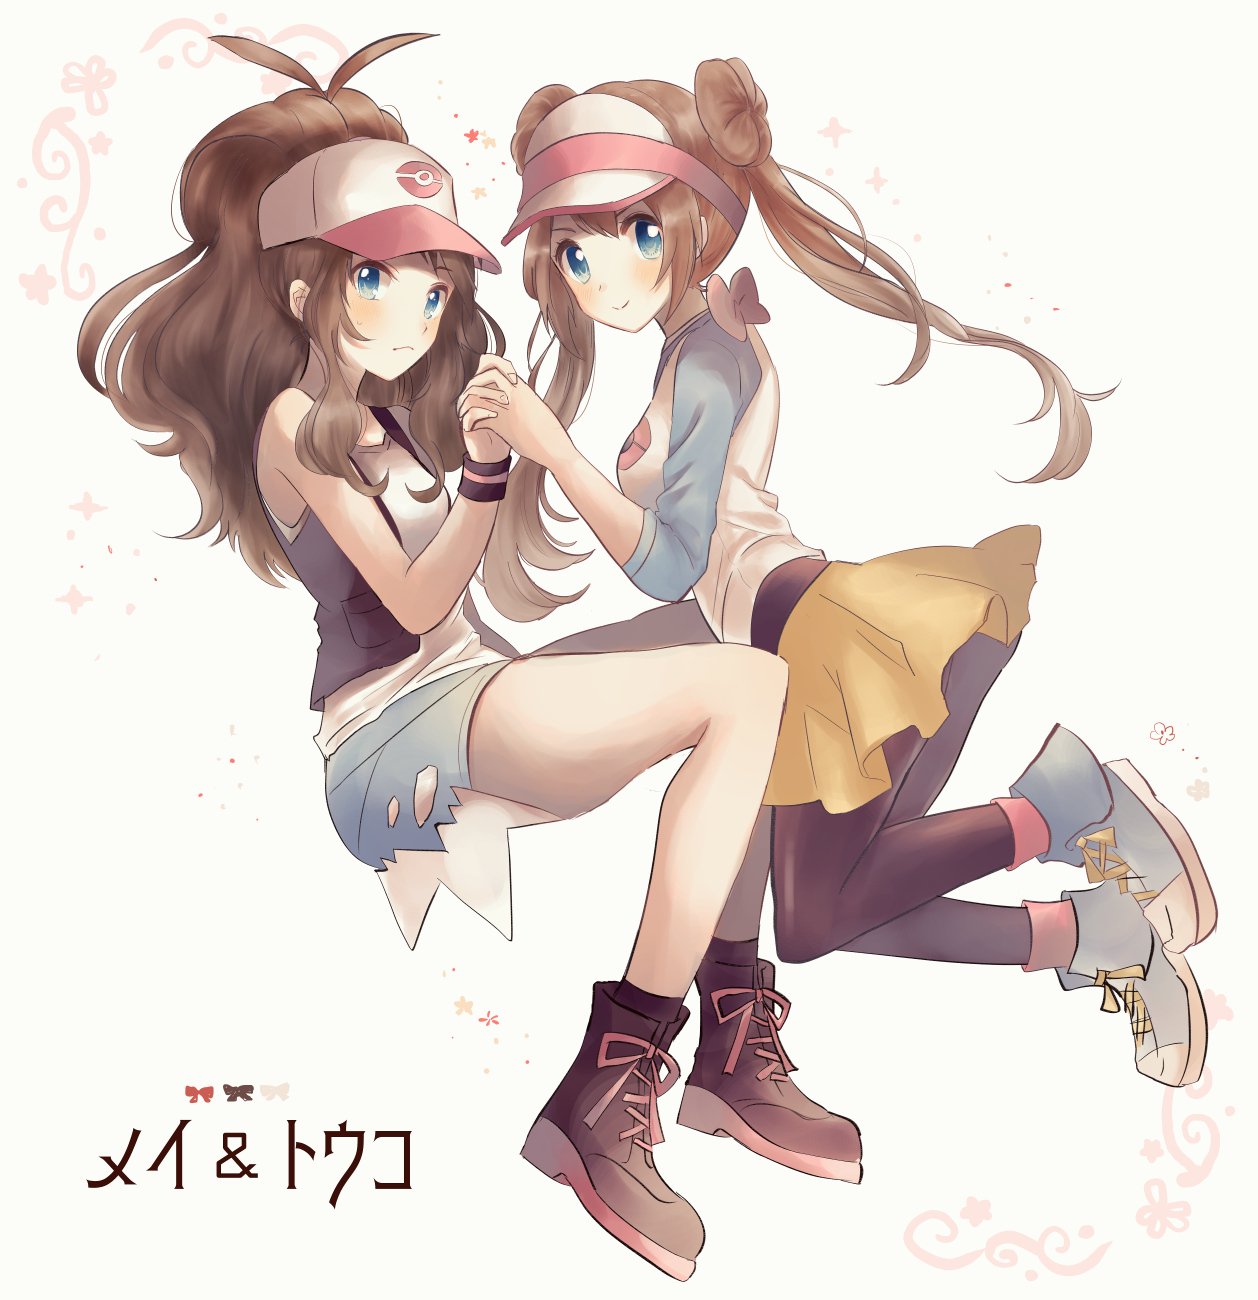 Anime 1258x1300 anime anime girls Pokémon Rosa (Pokémon) Hilda (Pokémon) long hair twintails ponytail brunette two women artwork digital art fan art hat Japanese